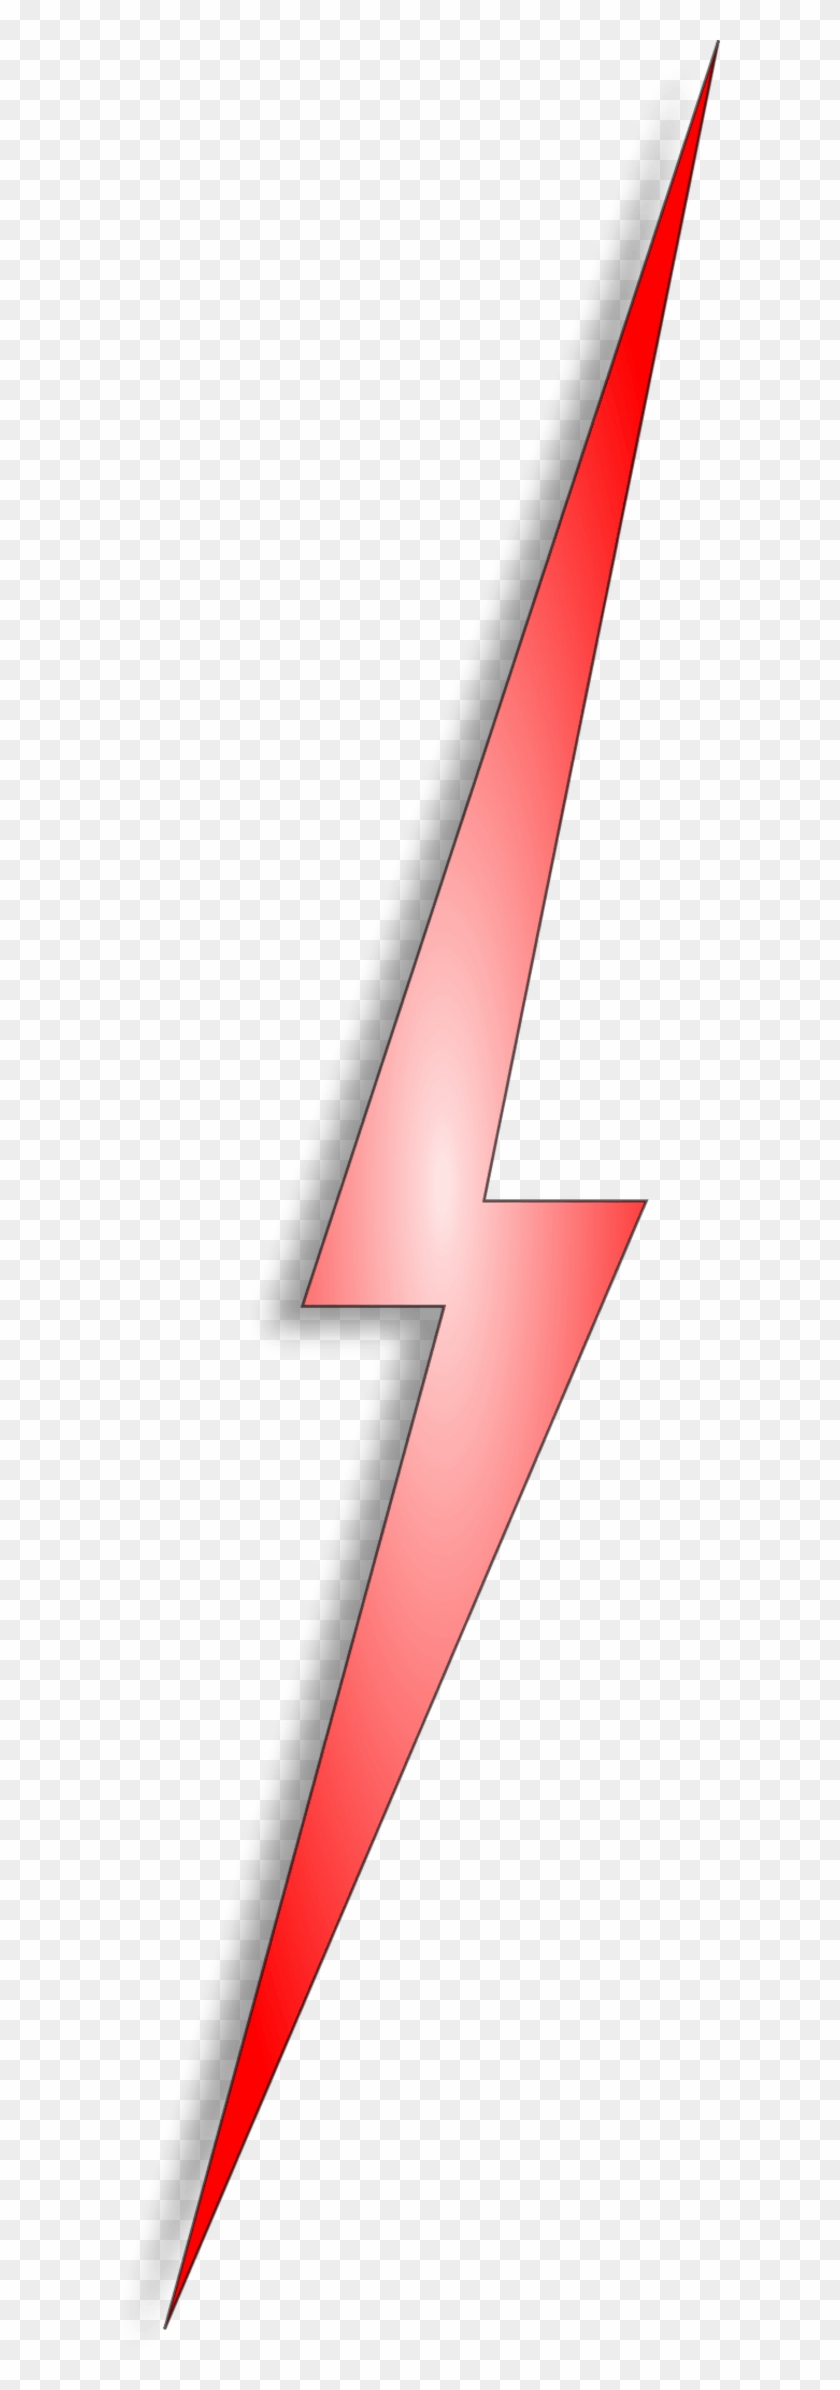 Yellow Lightning Electricity Bolt Thunder Lightning - Blue Lightning Bolt Clipart - Png Download #670411